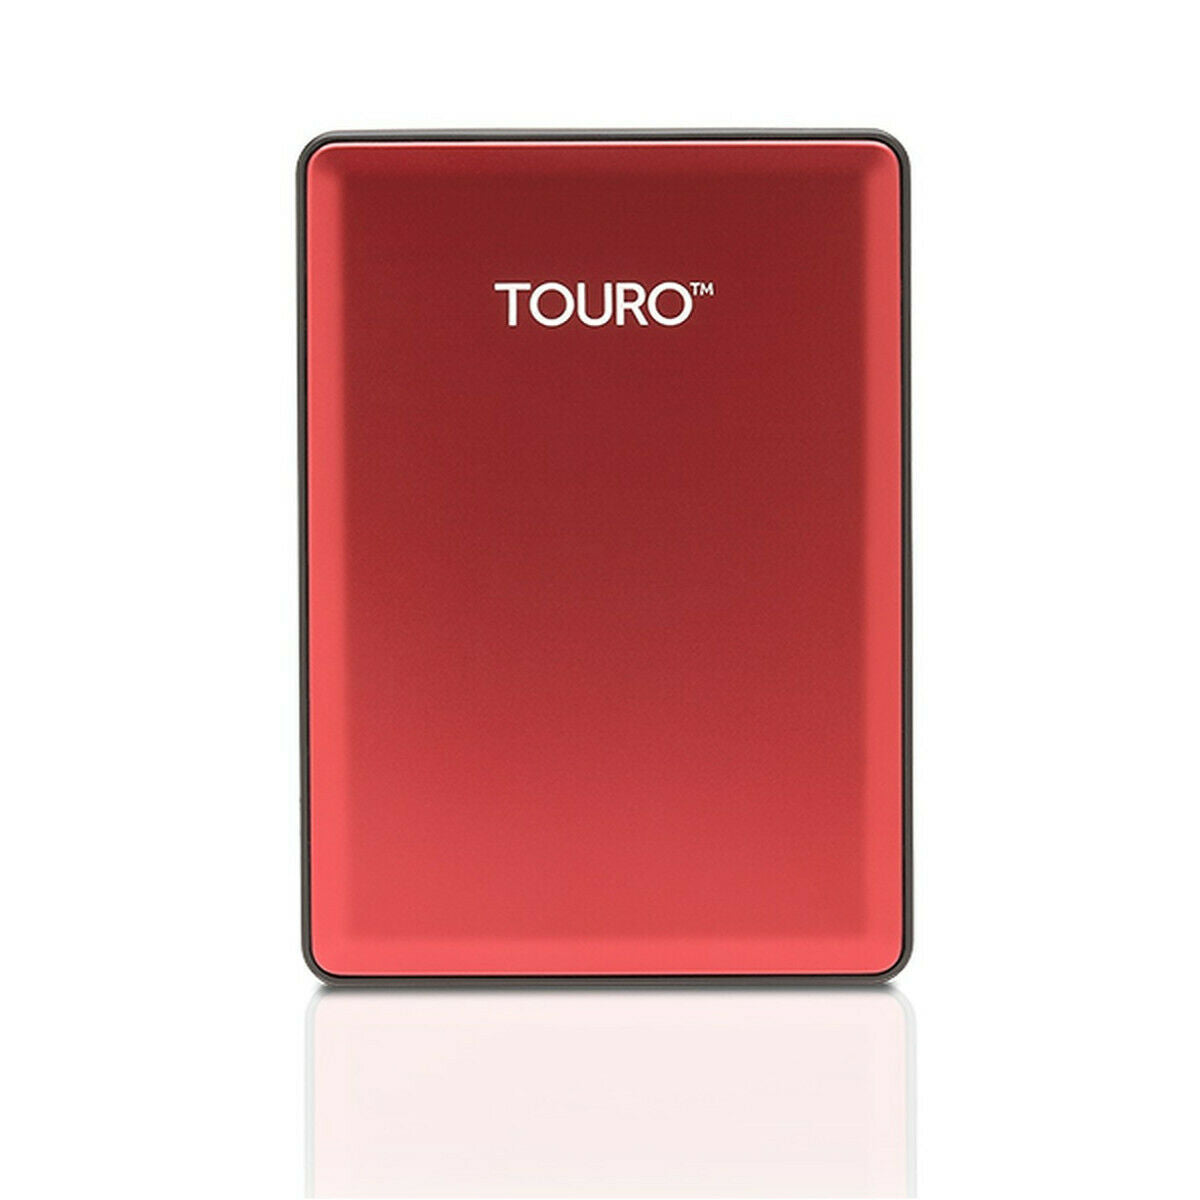 Touro S Portable External Hard Drive 500GB USB 3.0 for PC, Mac, Laptop - 0S03784